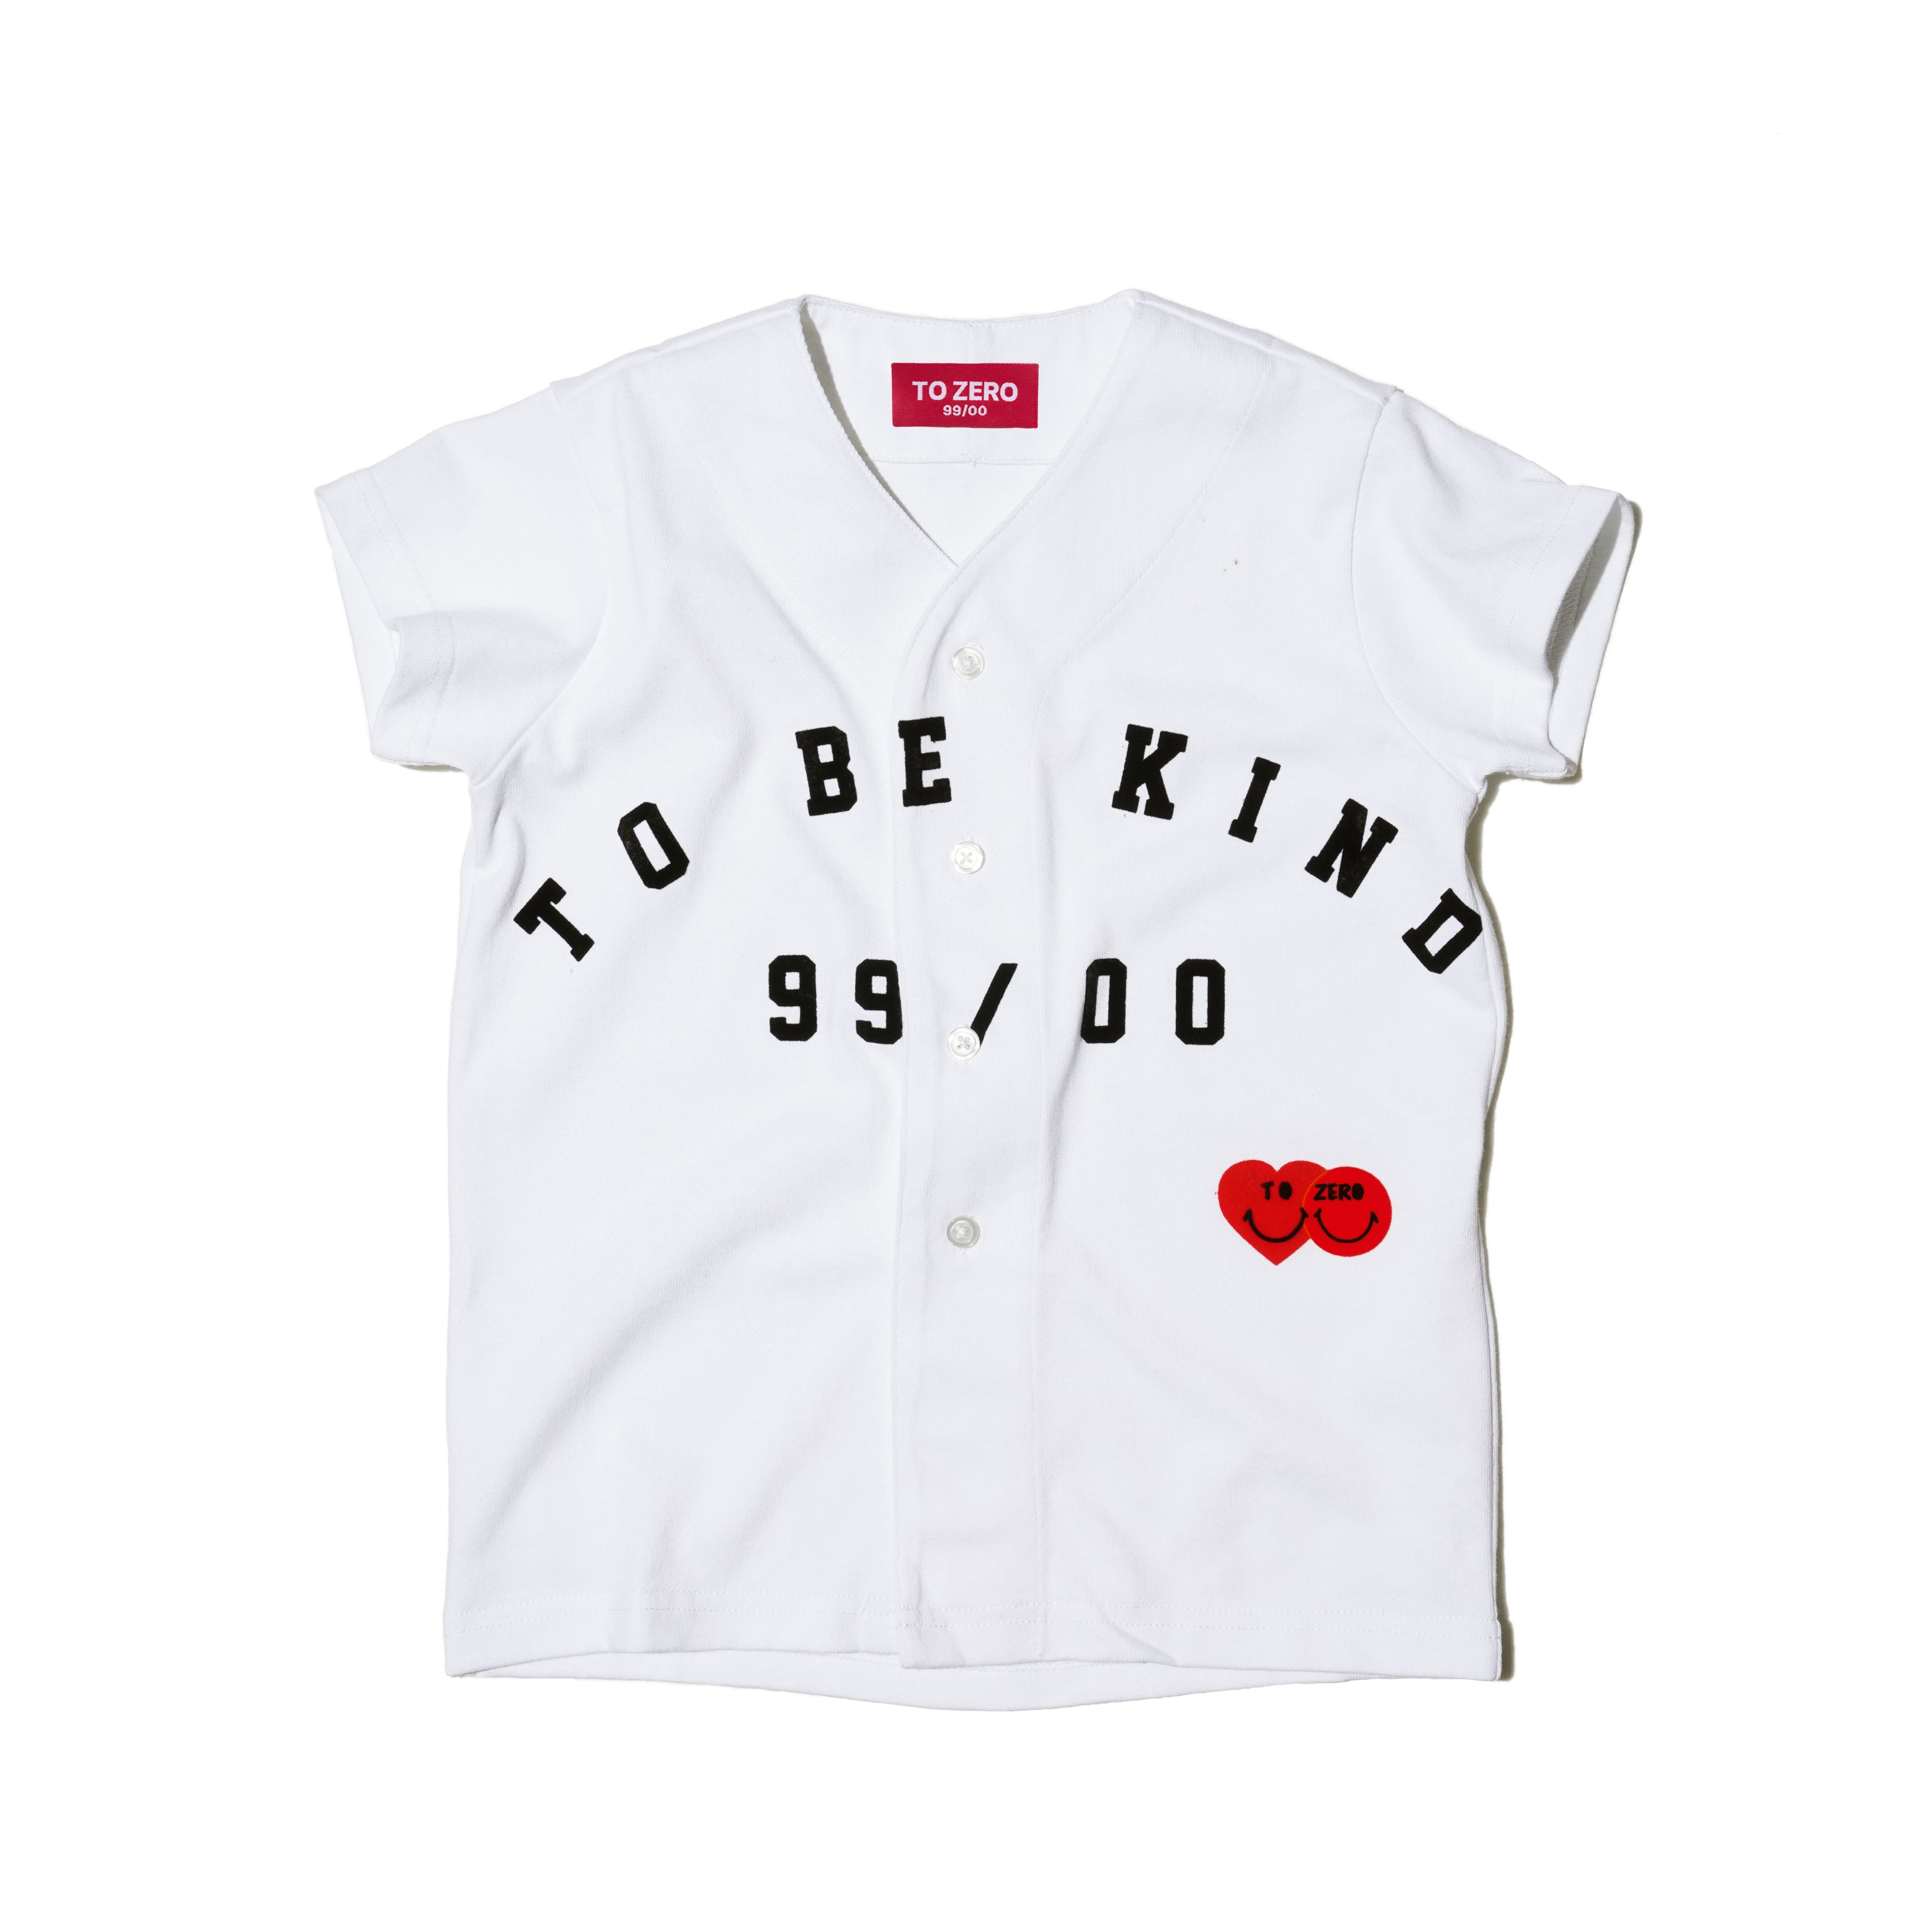 'TO BE KIND’ Kids Flocking Print Baseball T-Shirt